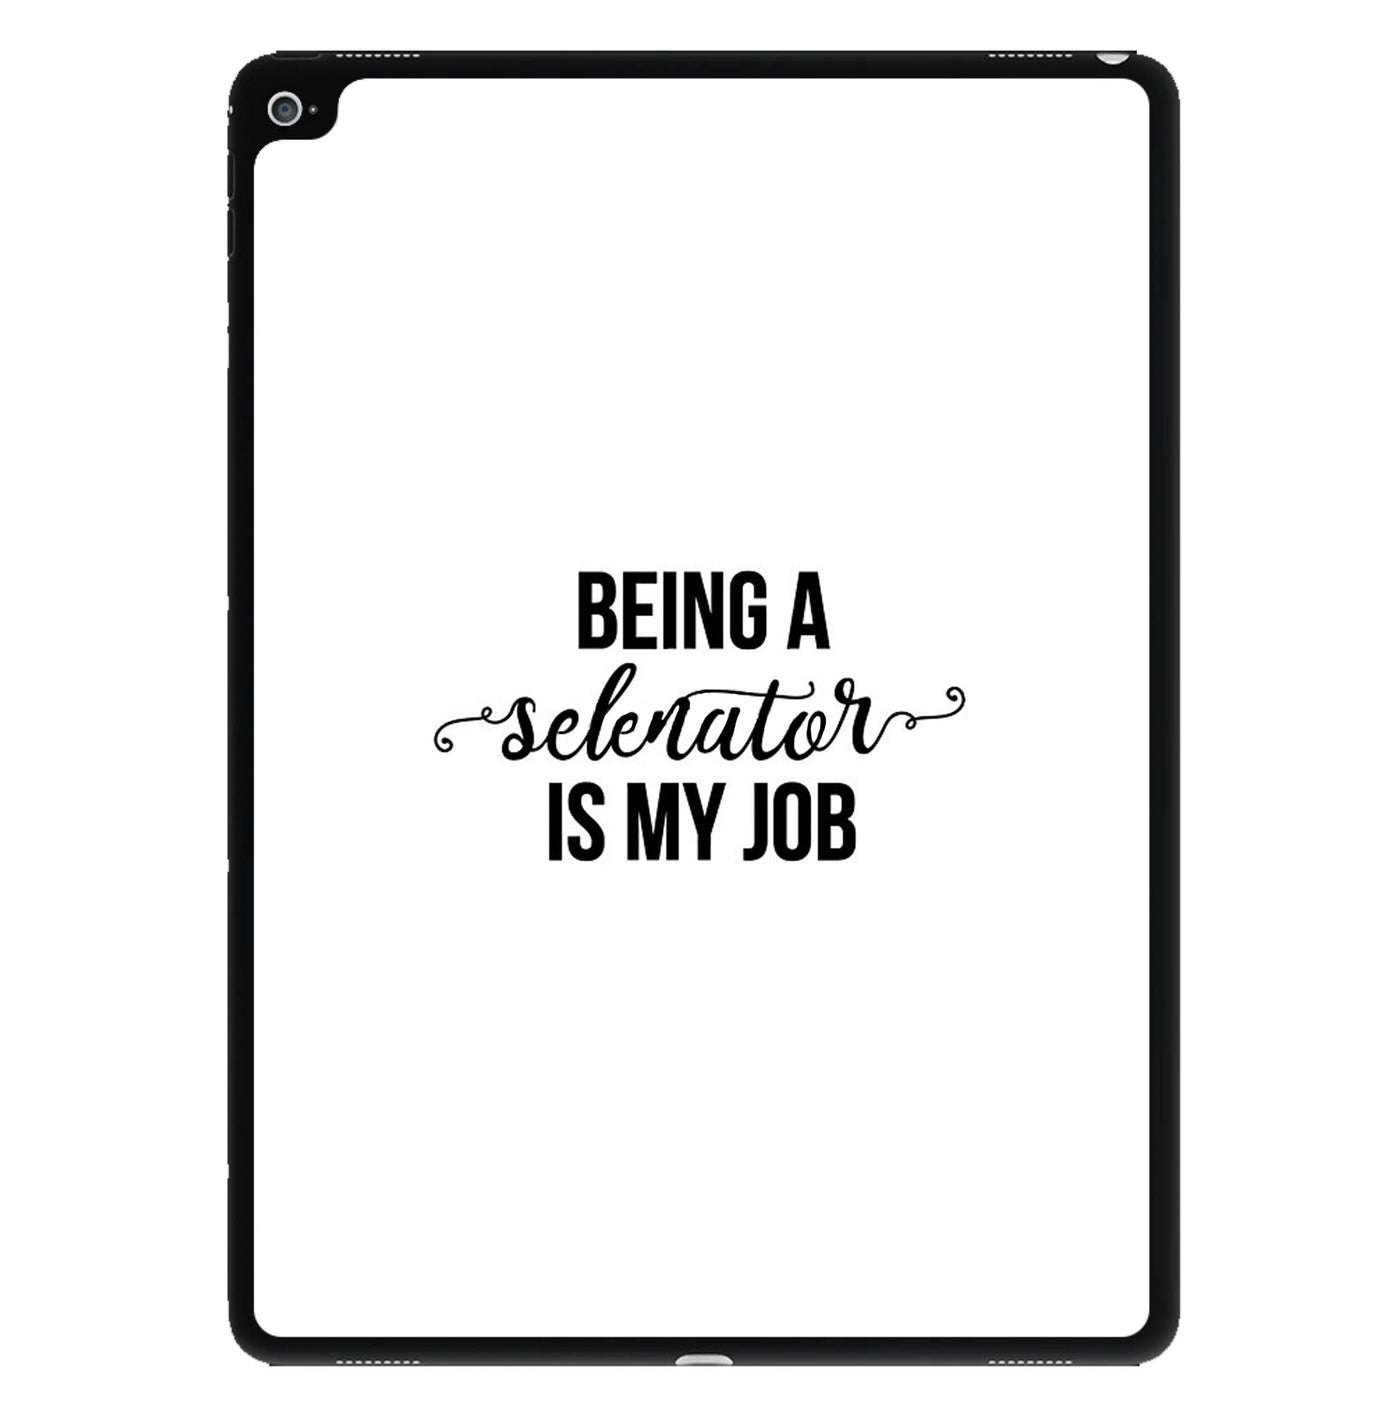 Being A Selenator Is My Job... iPad Case